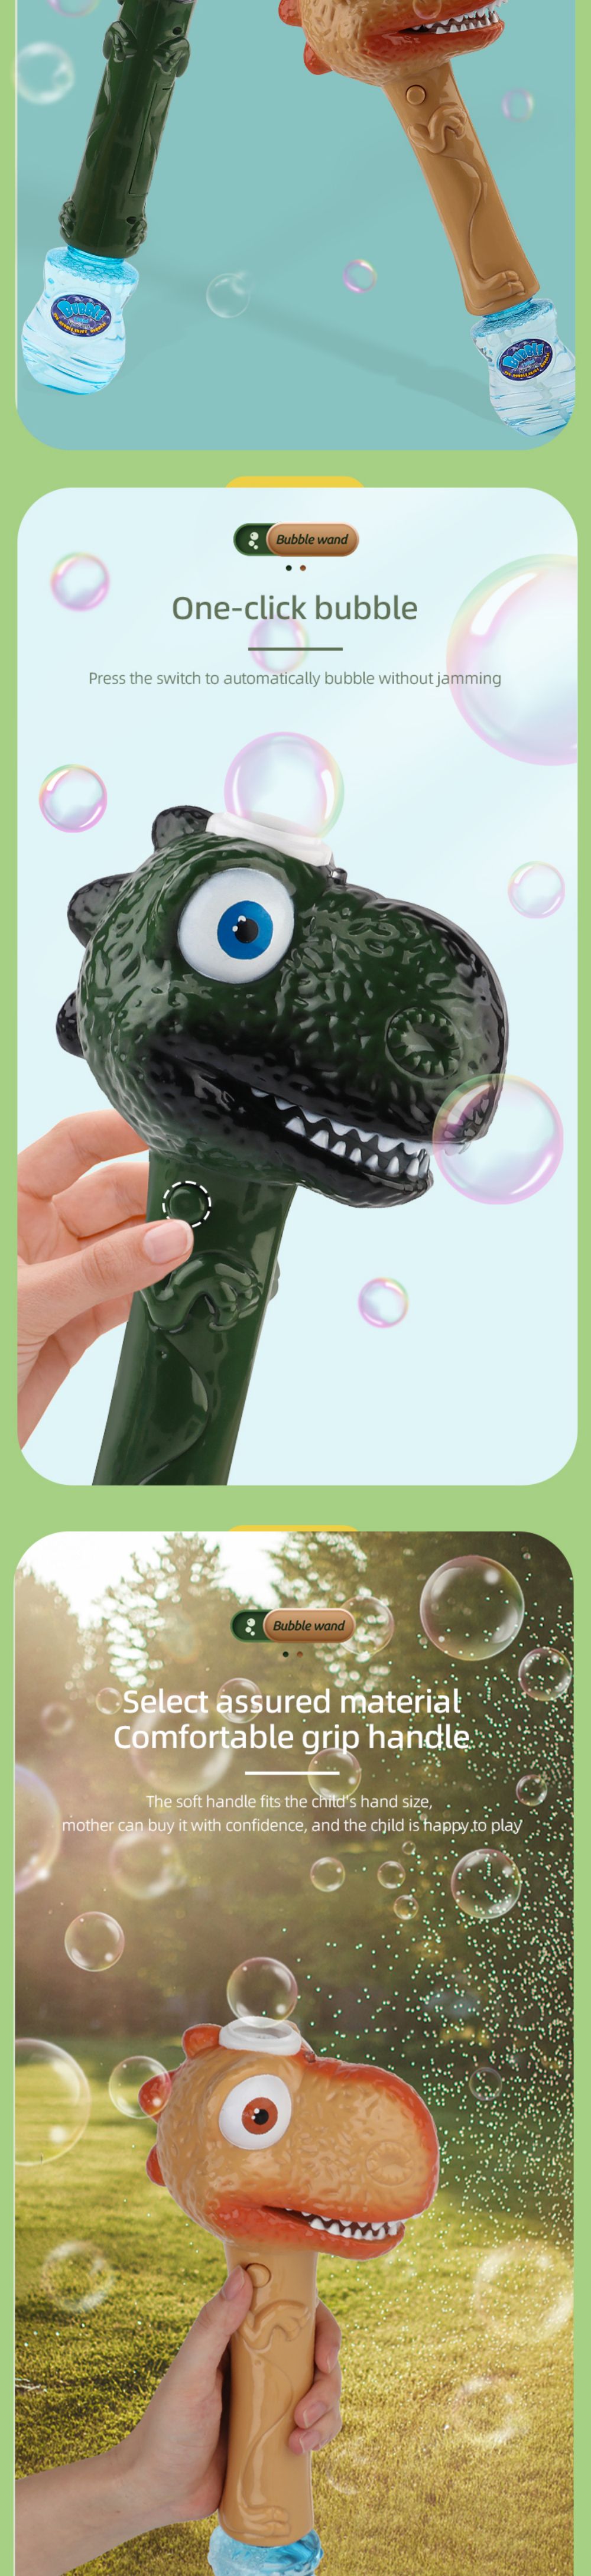 Dinosaur Bubble wand toy_02